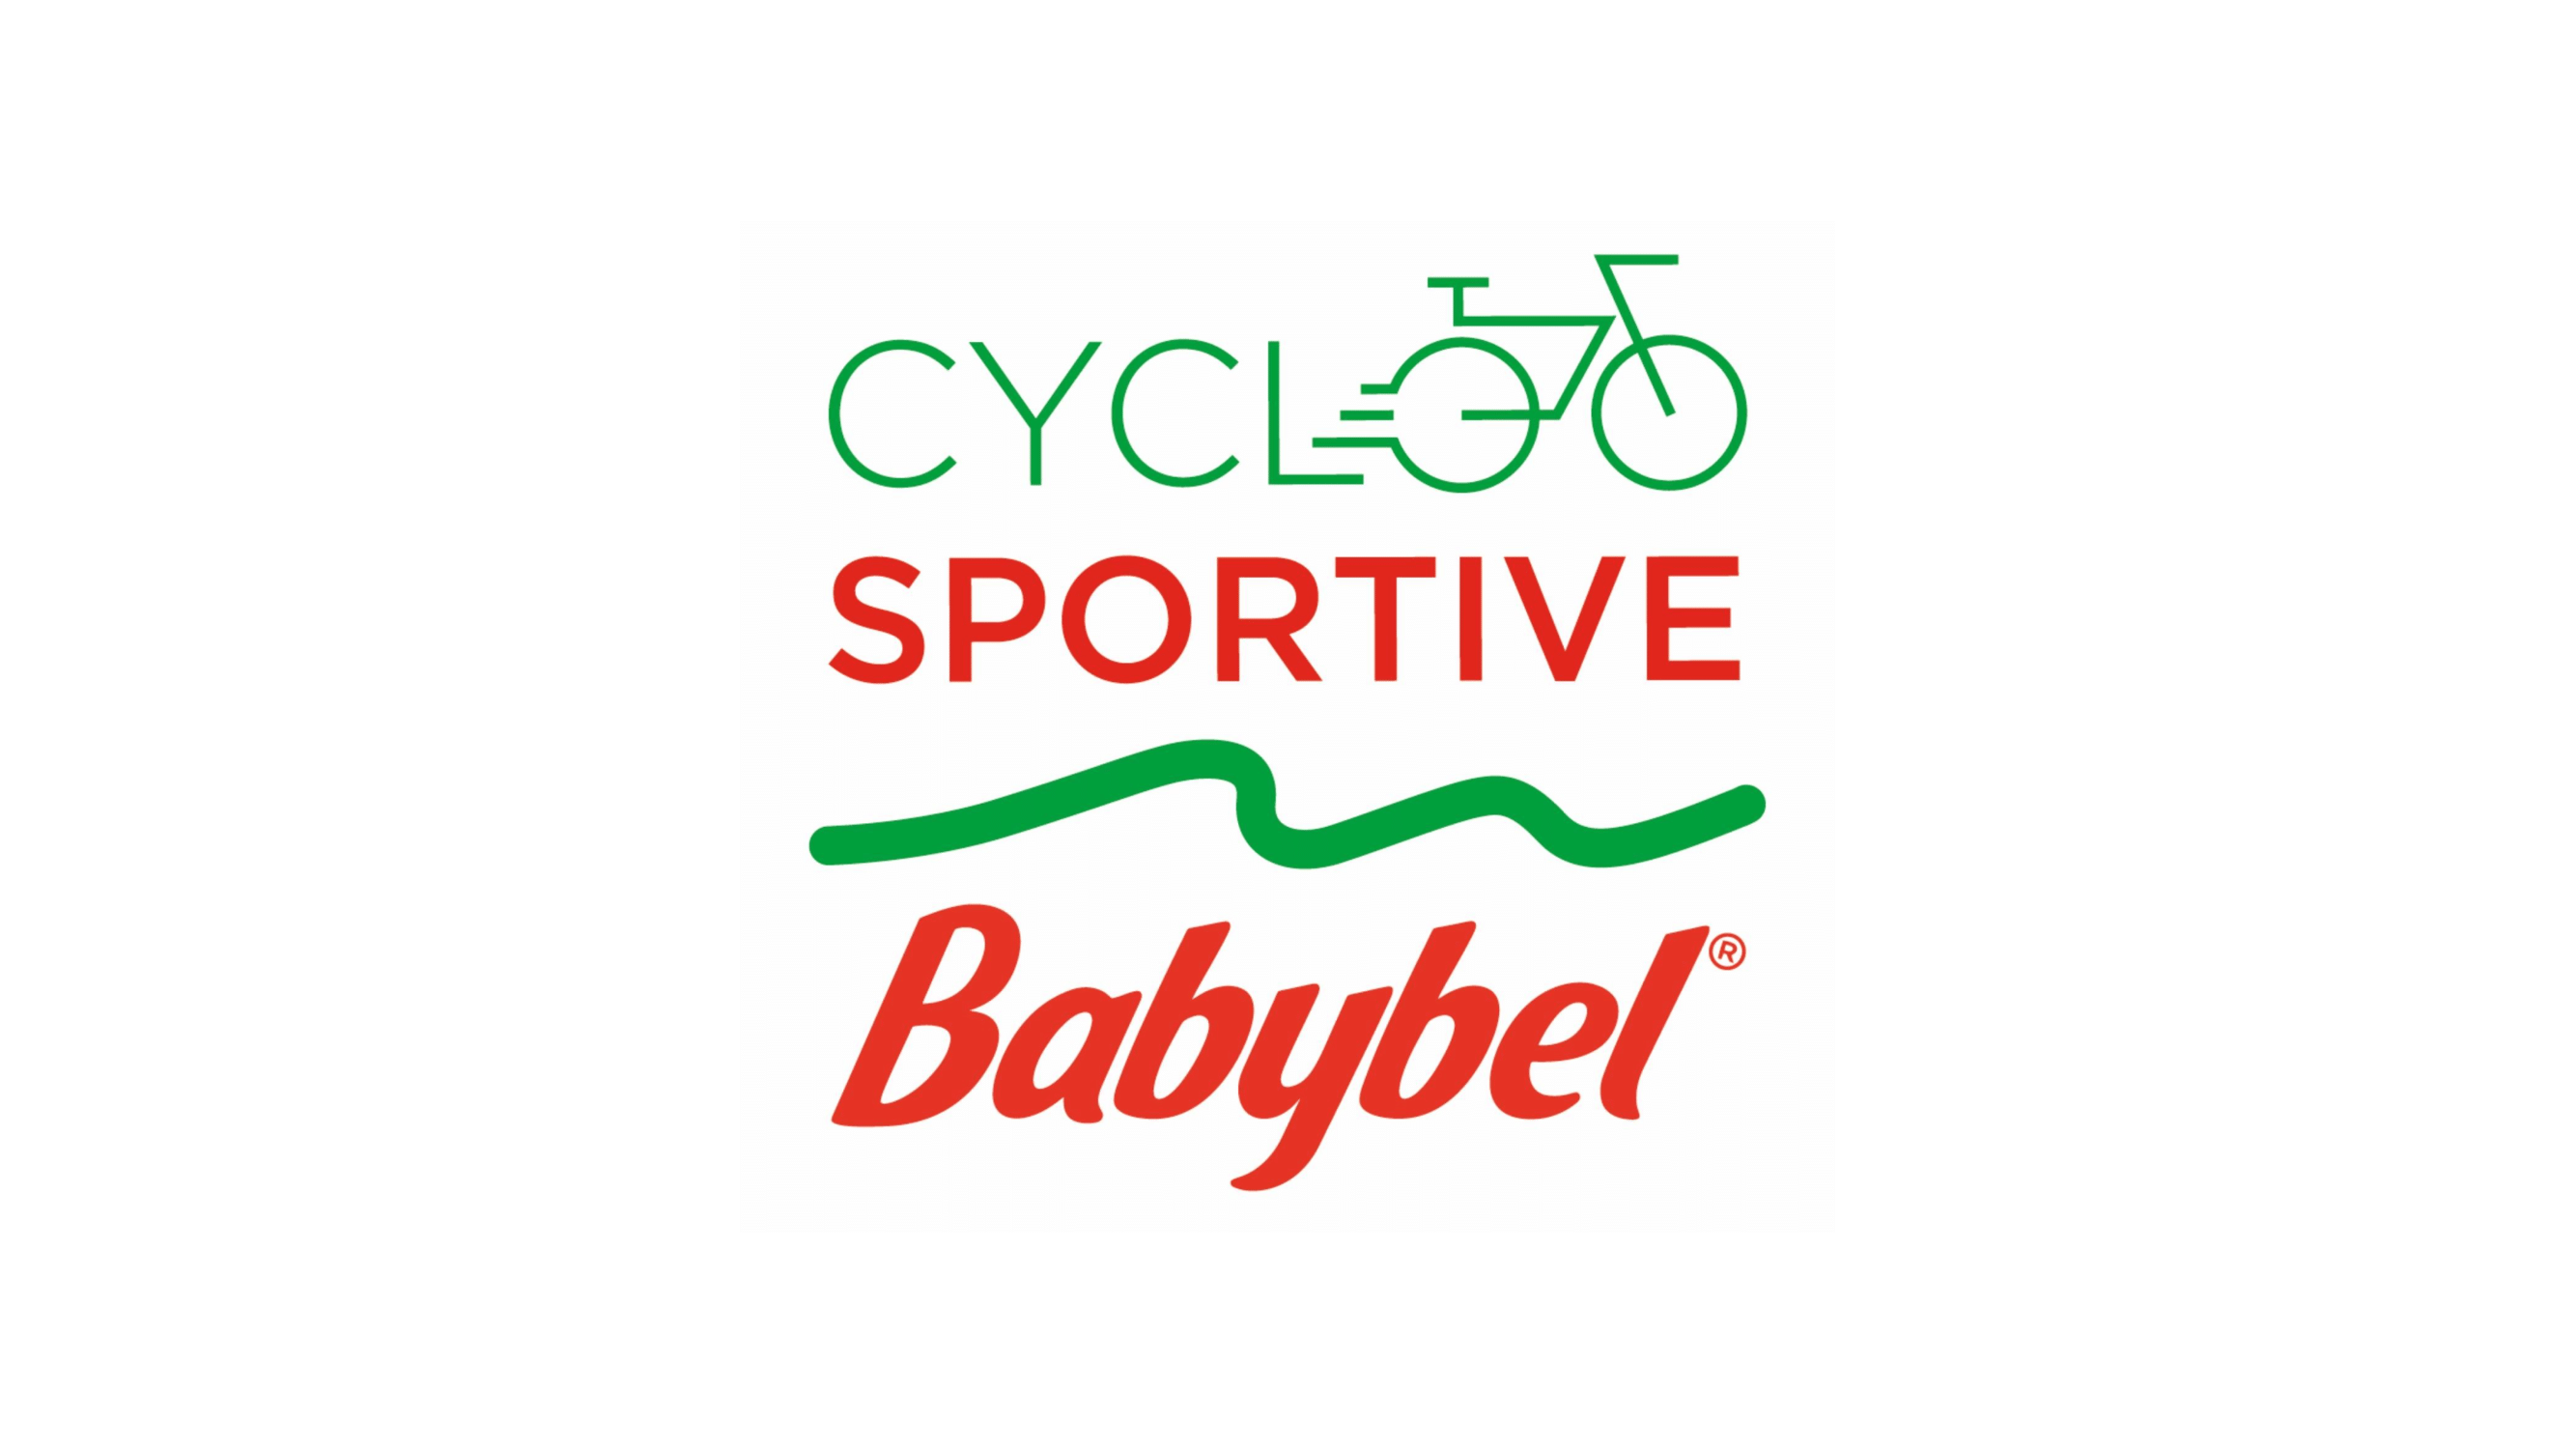 Cyclosportive Babybel